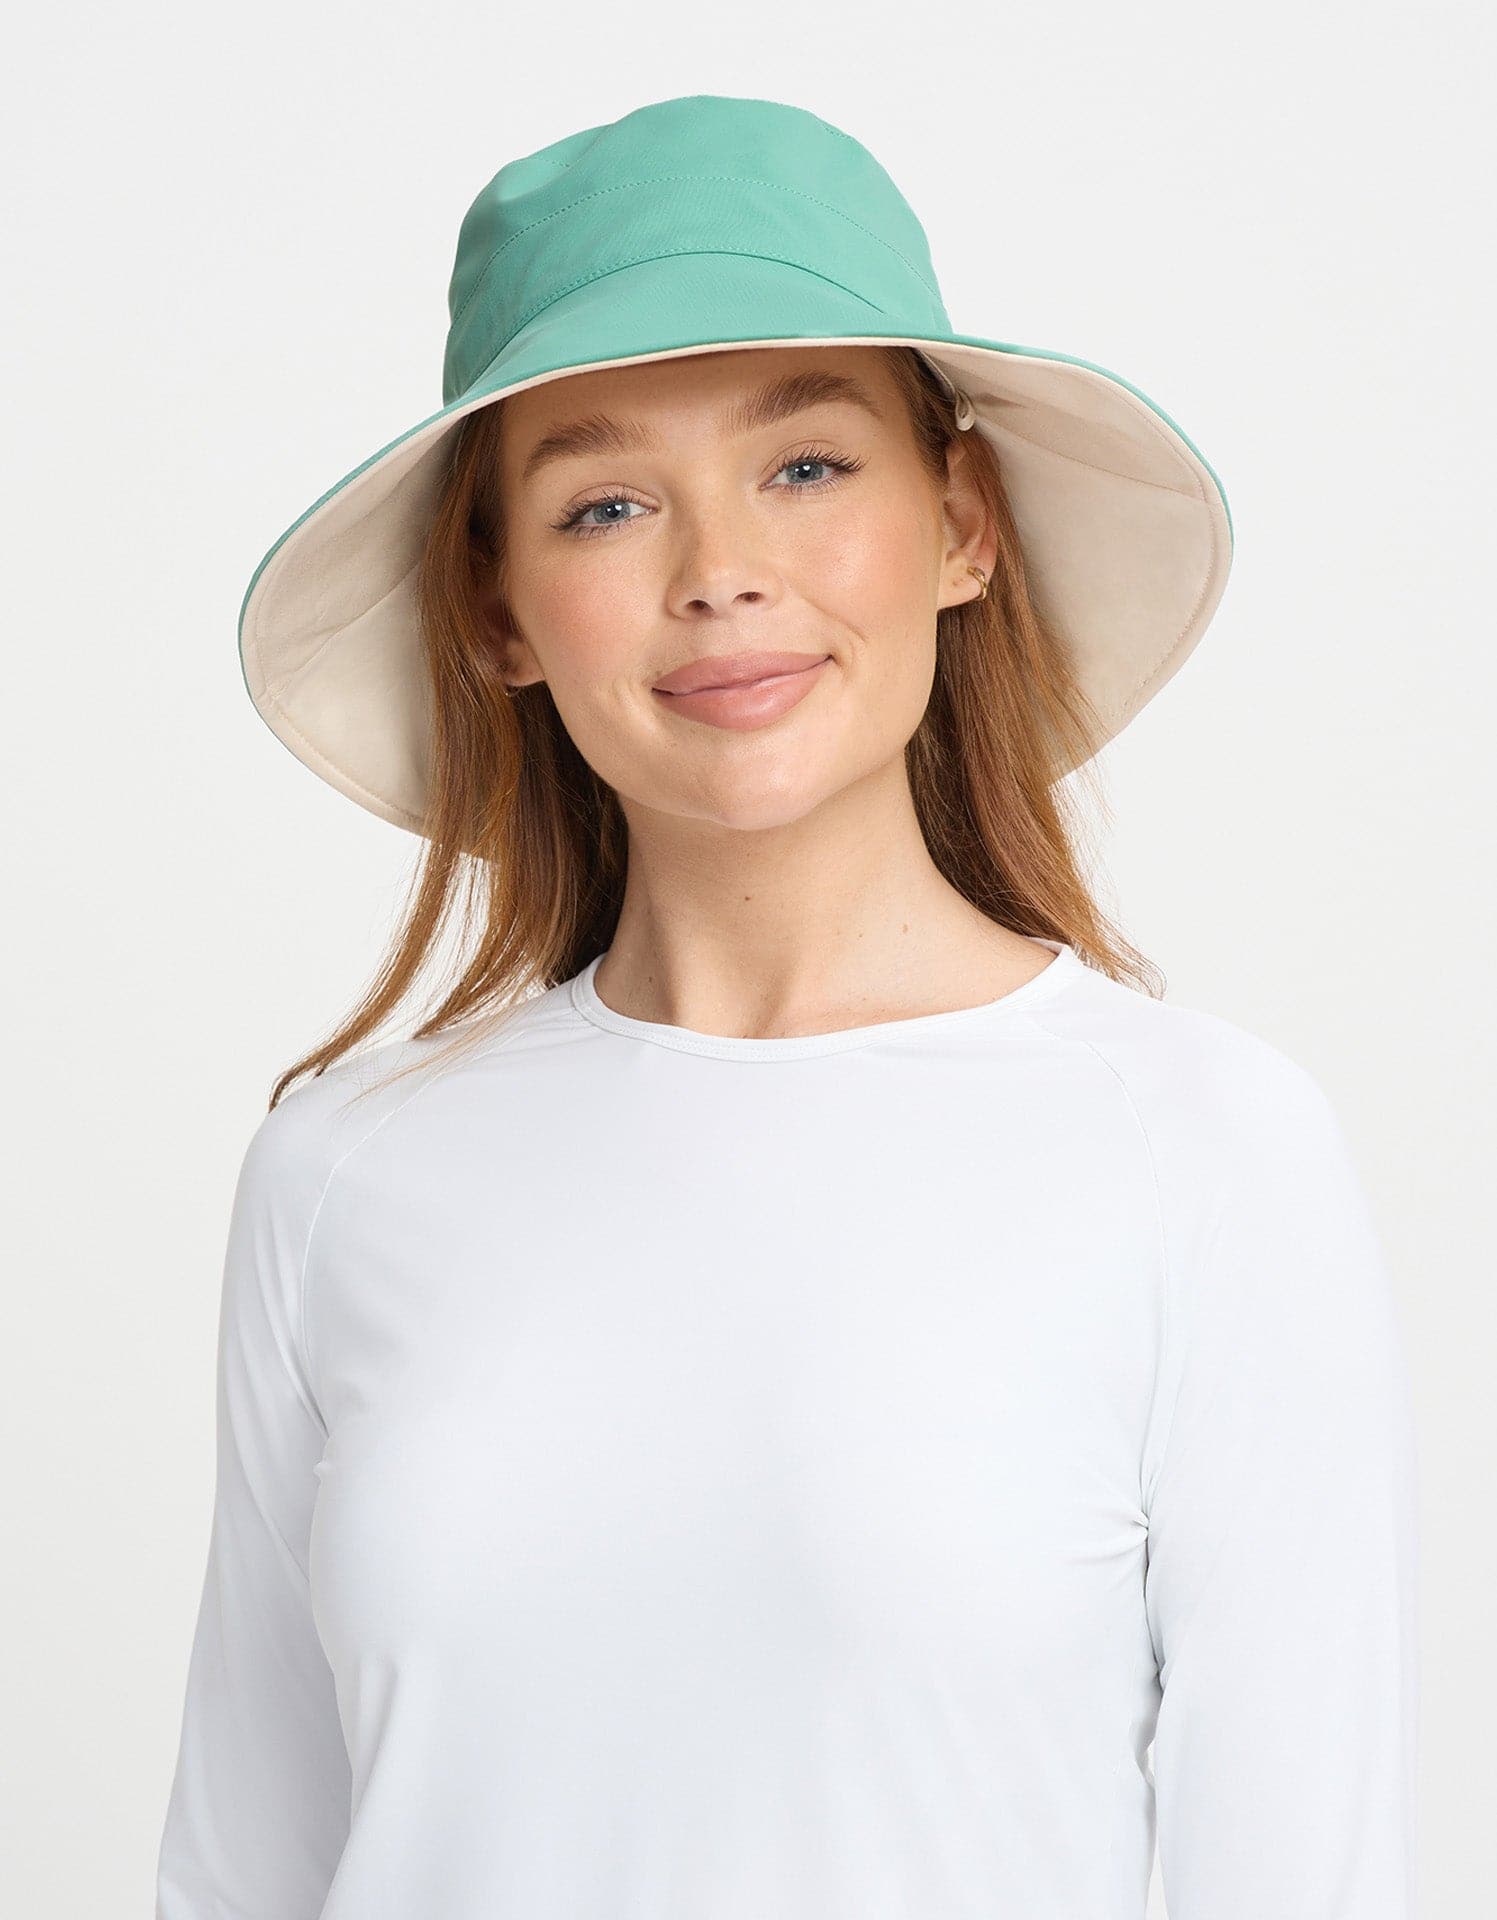 SOMALER Womens Cotton Wide Brim Sun Hats UPF50 UV Packable Beach